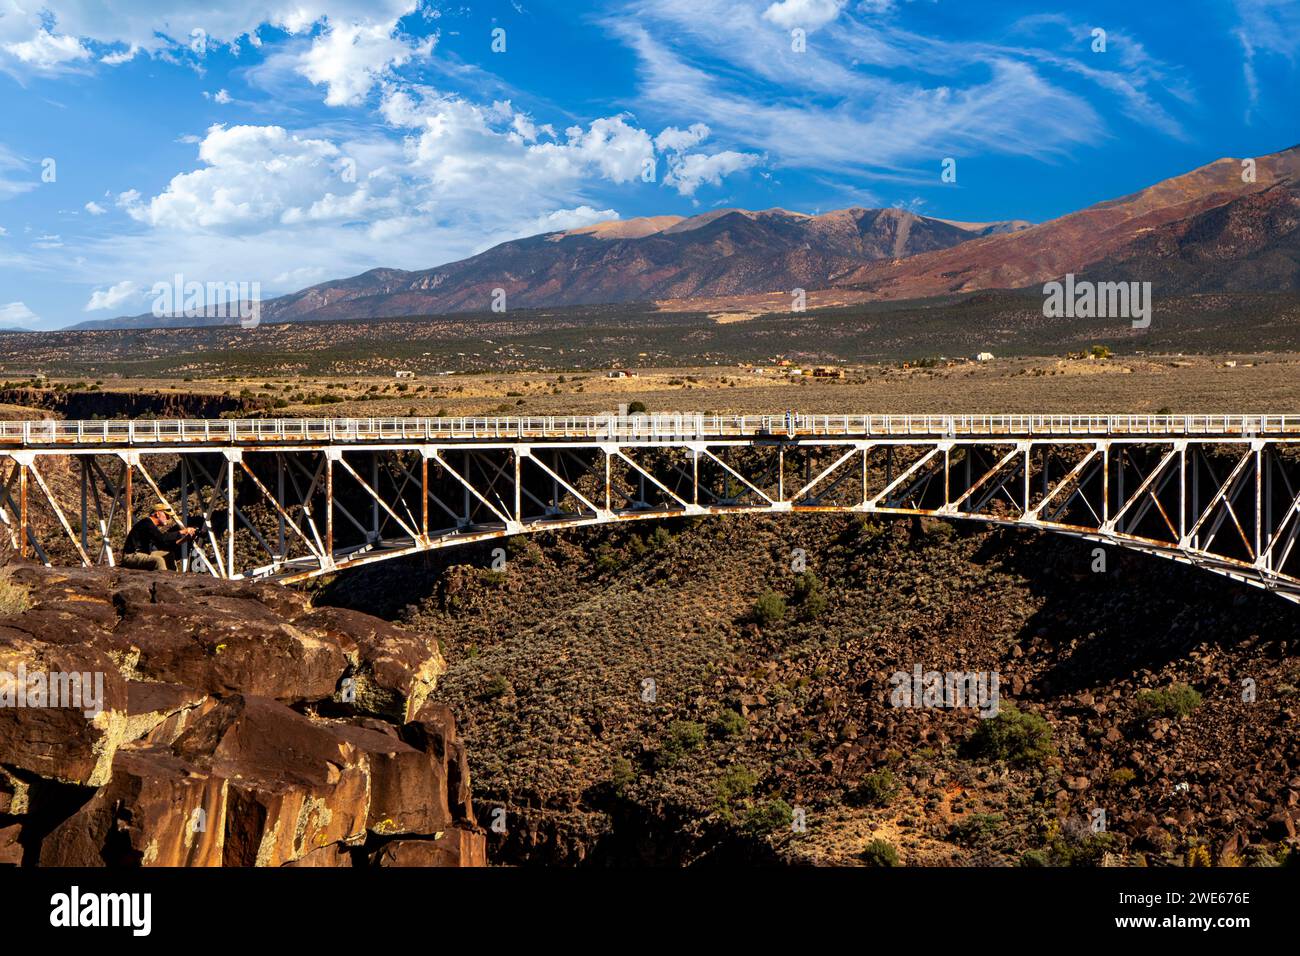 The Rio Grande Gorge Bridge, north of Taos, New Mexico, draws visitors from around the world. Stock Photo